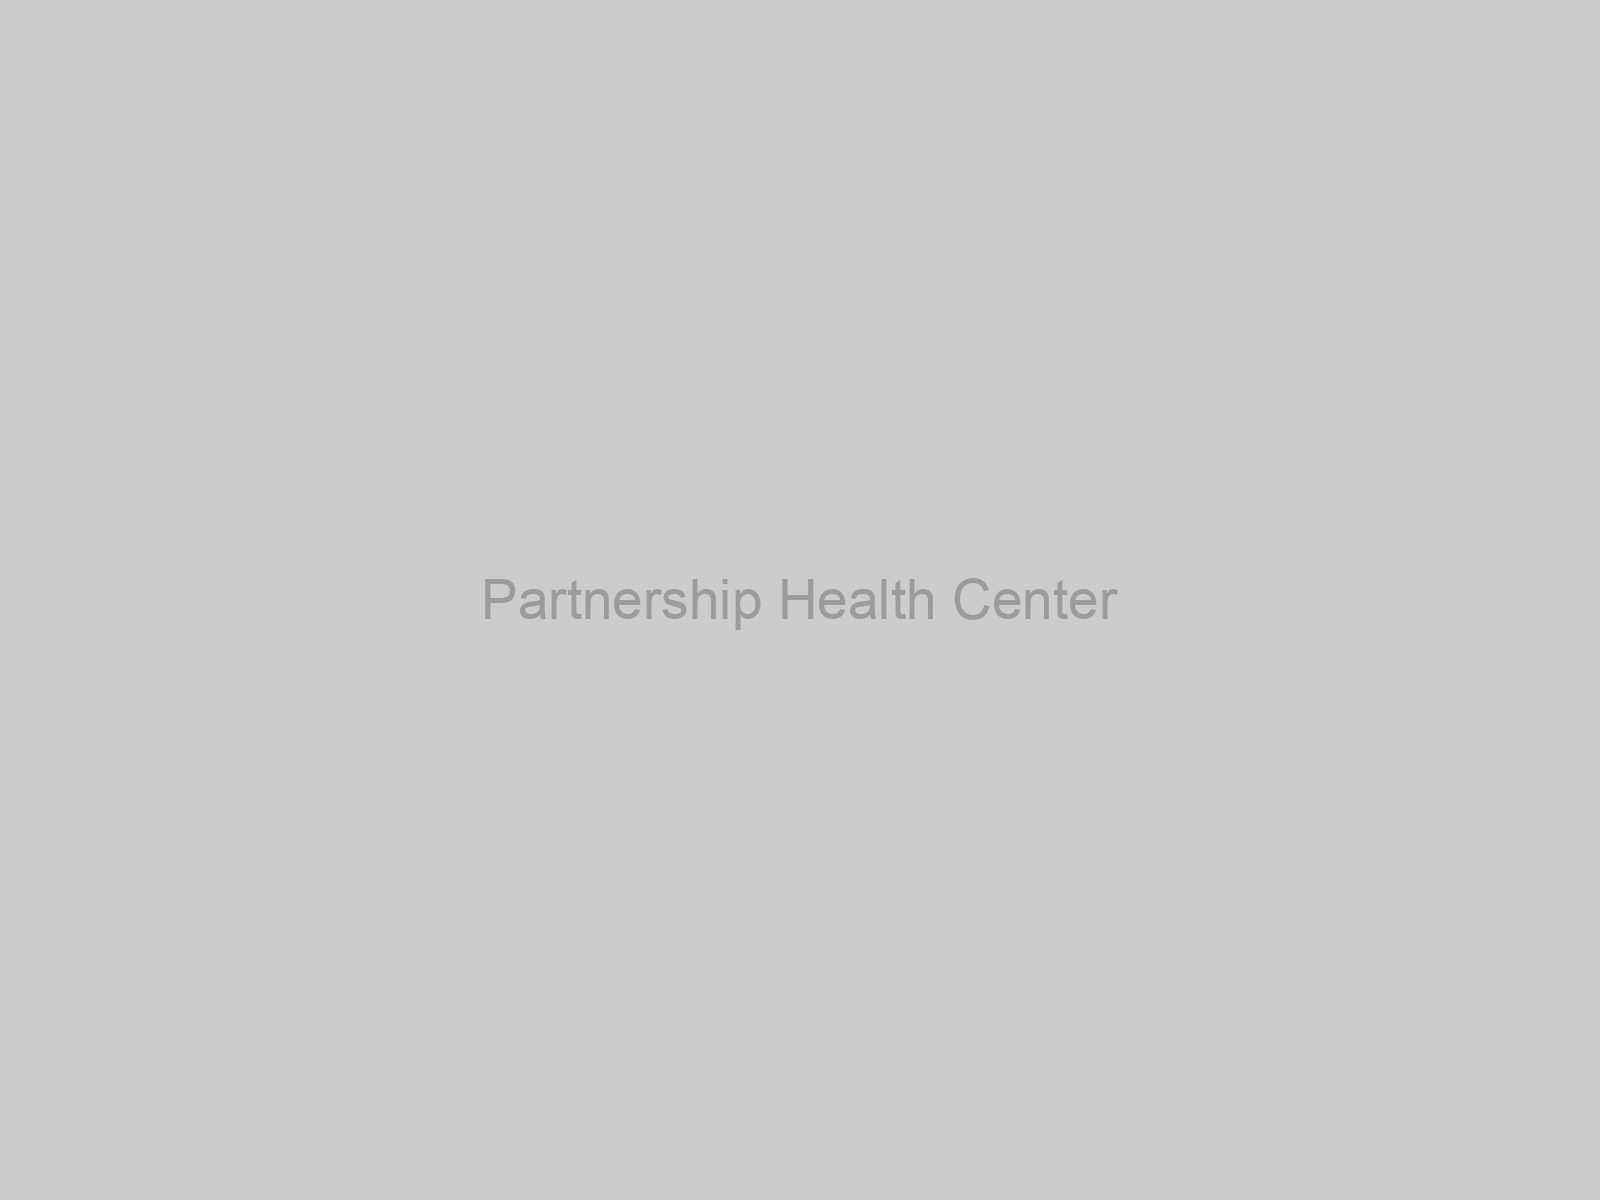 Partnership Health Center